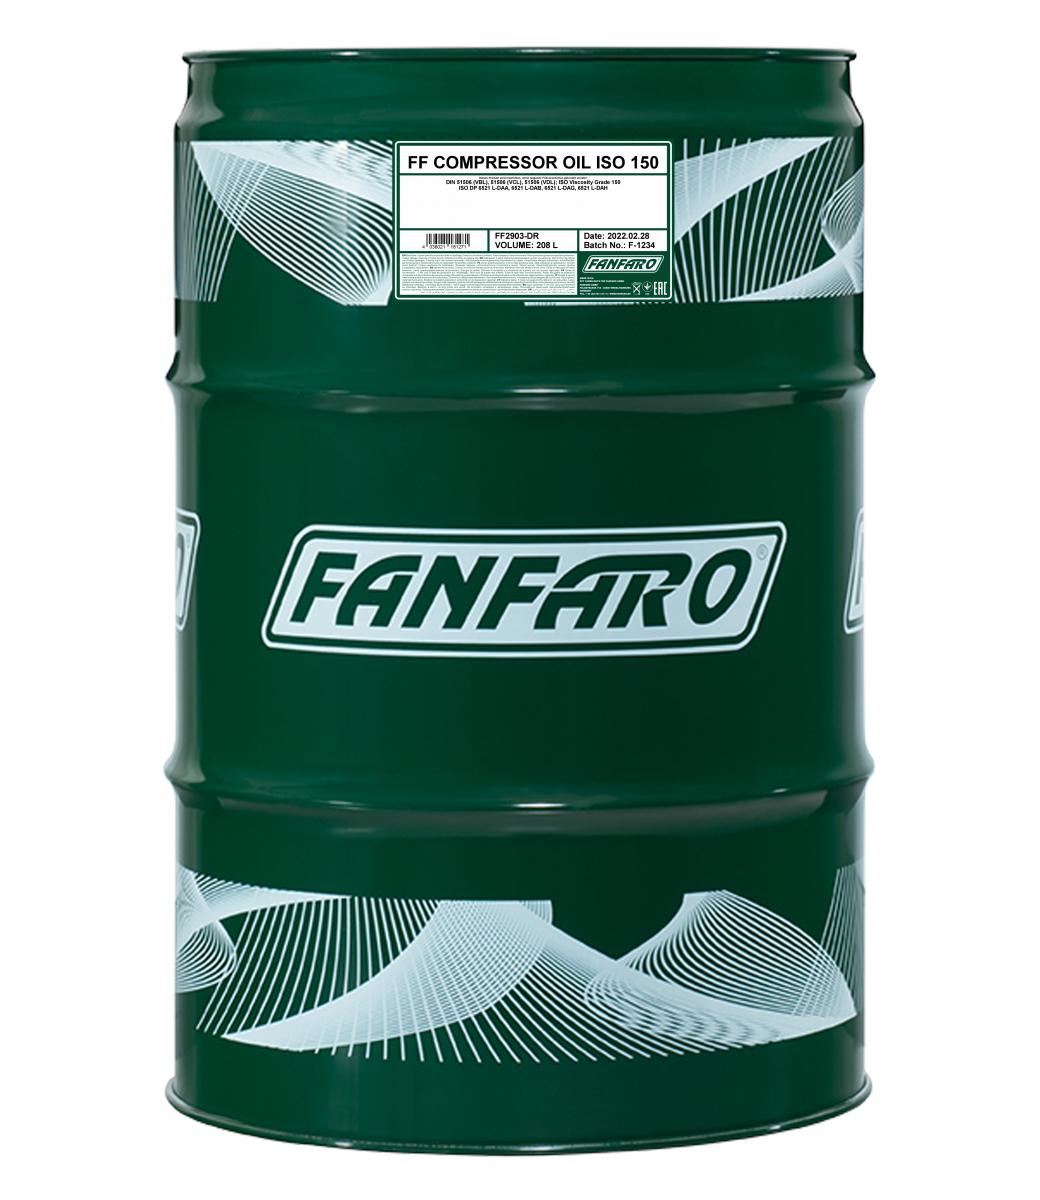 FANFARO COMRESSOR OIL ISO 150